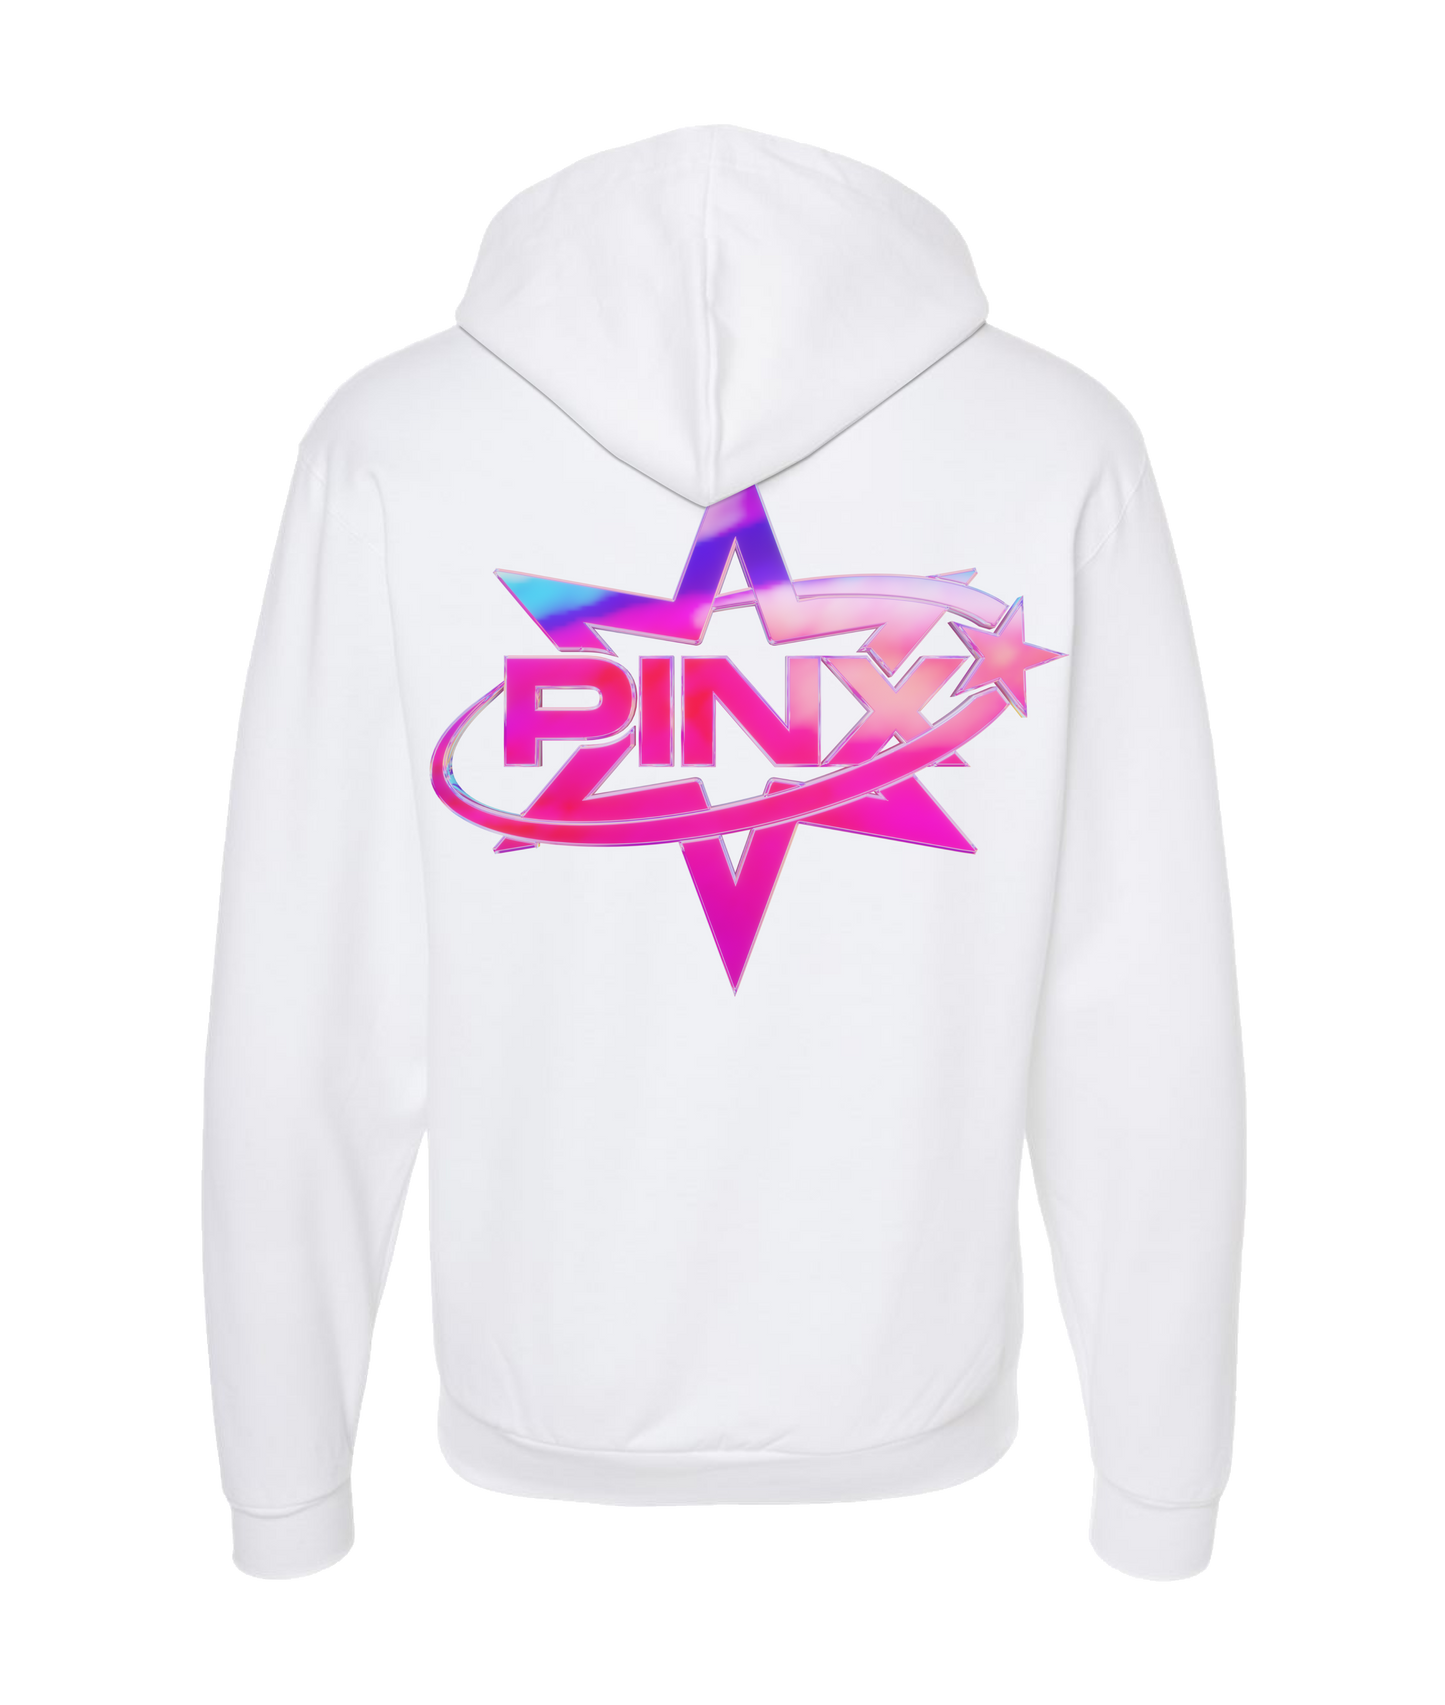 Pinx - Star Logo - White Zip Up Hoodie